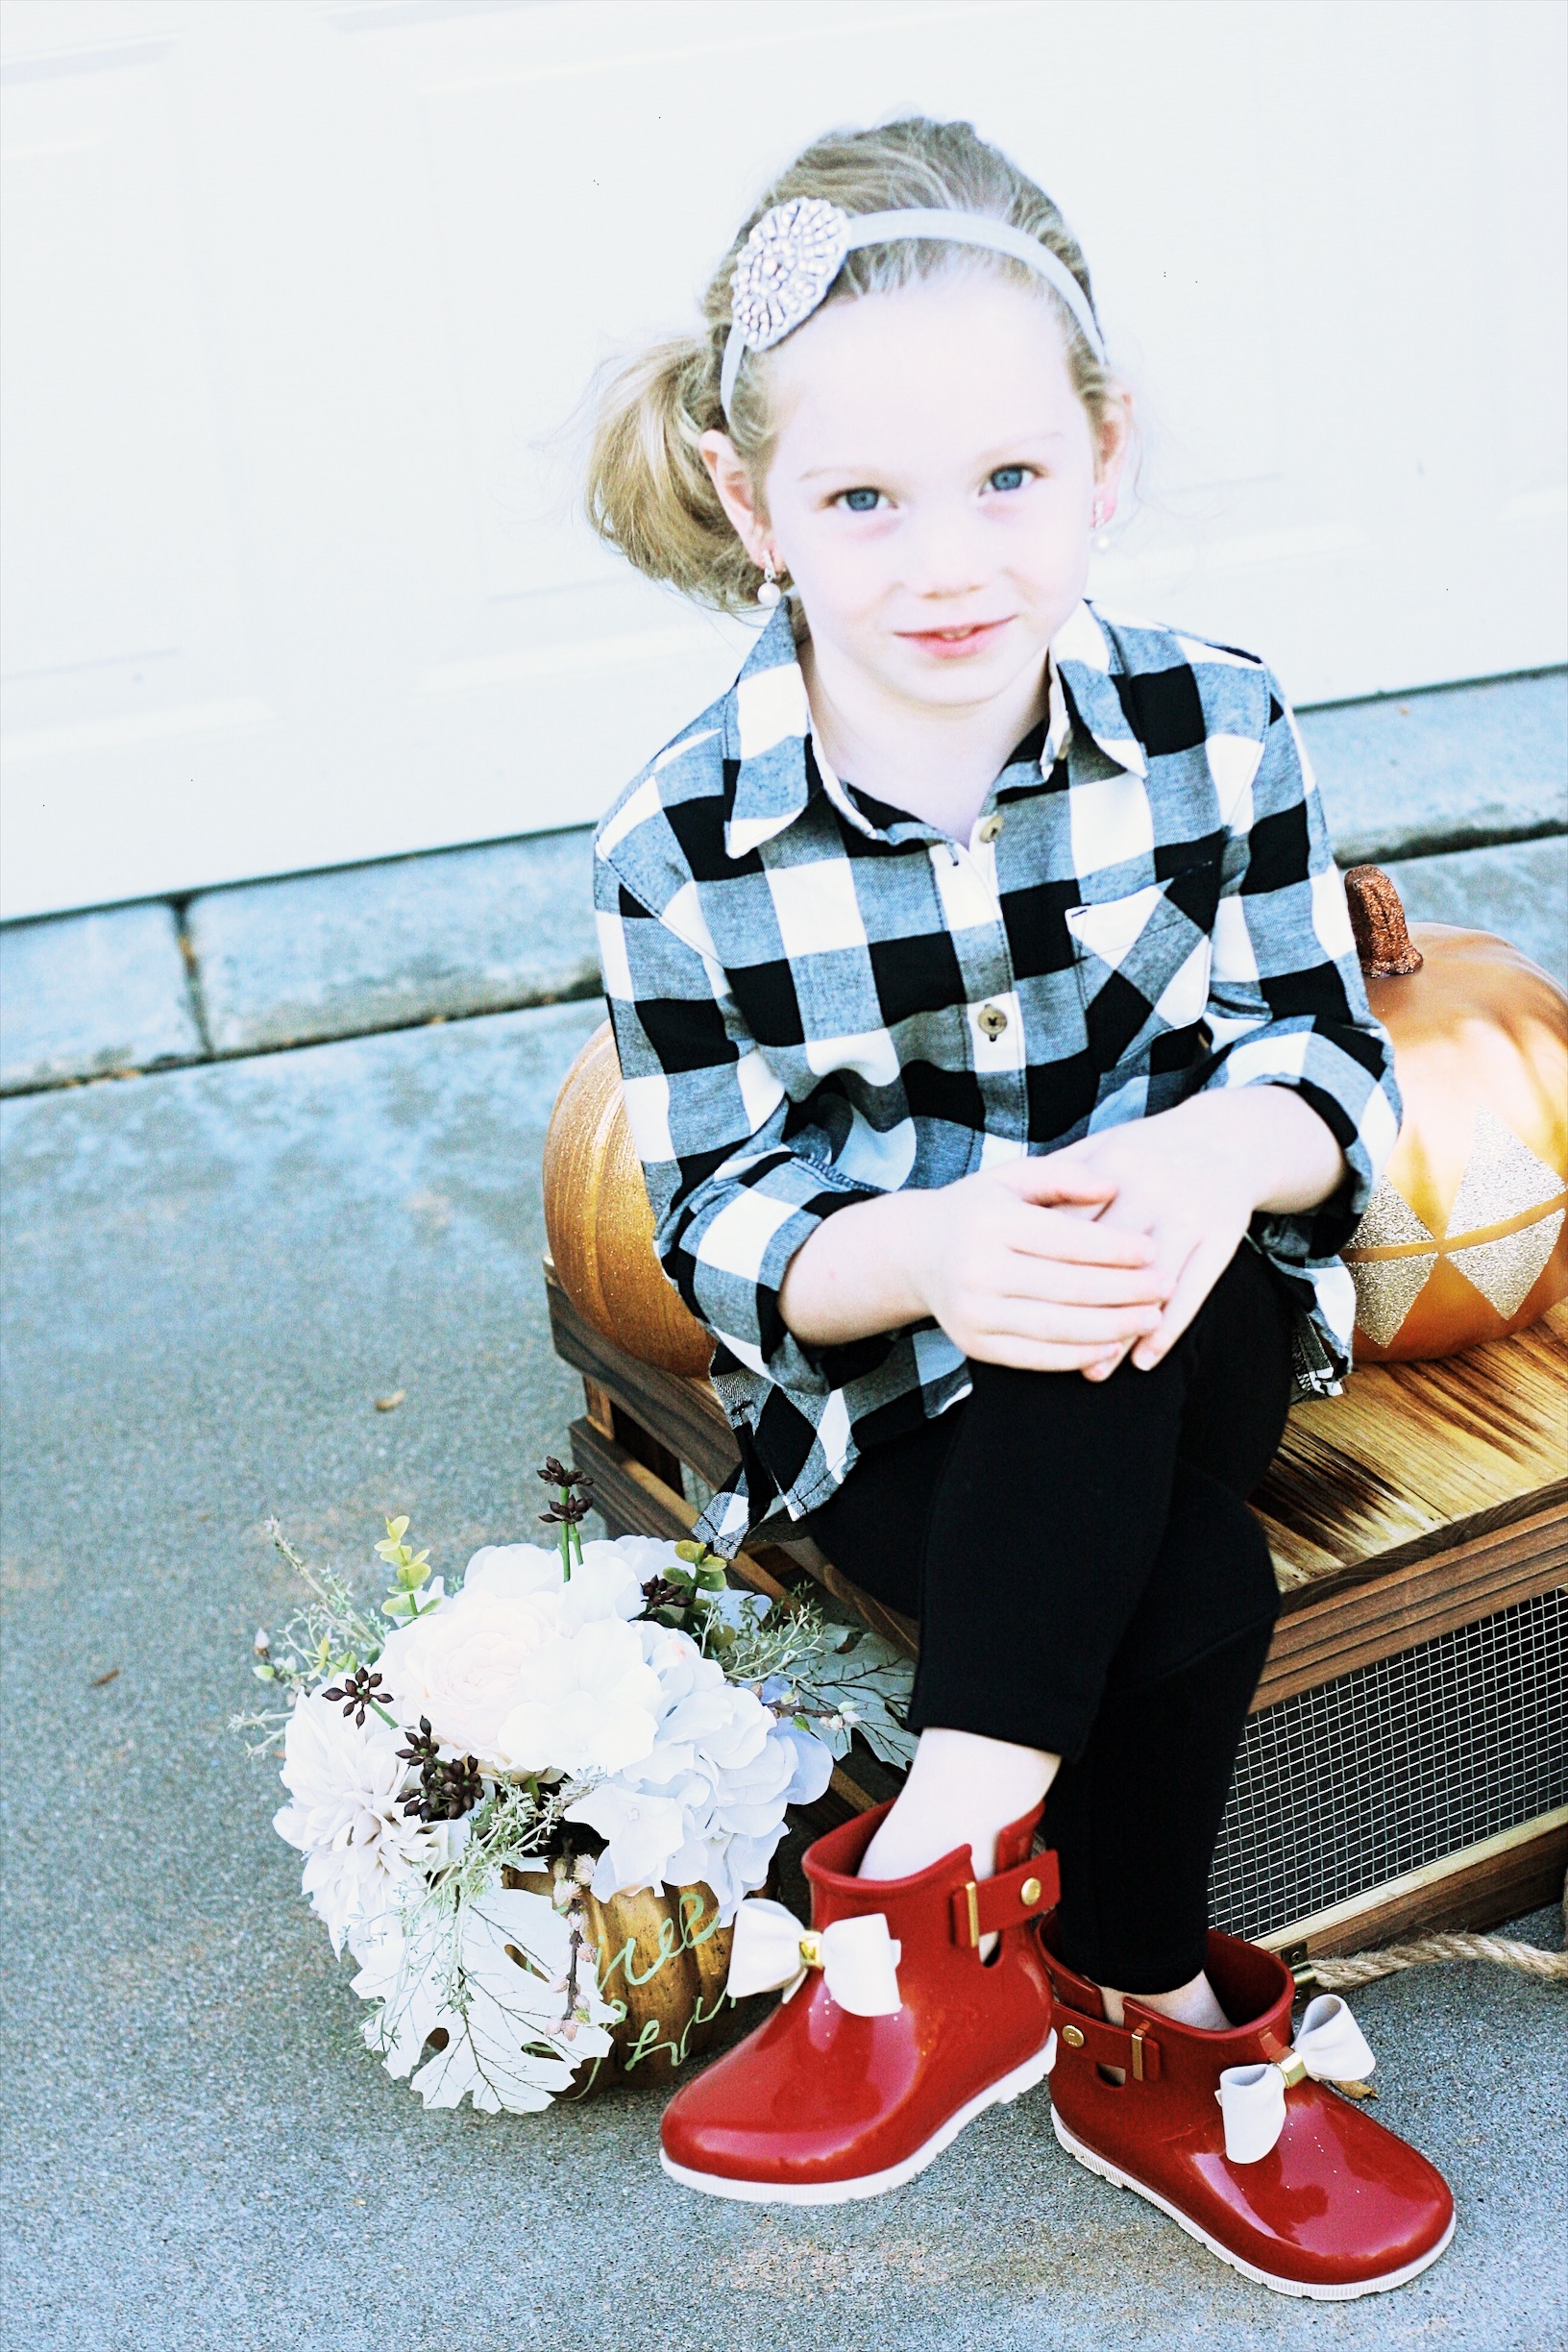 Nebraska Motherhood + Fashion blogger, Leslie of Tiny Stampede shares Little Girls Winter Essentials Gap | Old Navy | Nordstrom Rack | Target | Macy's | sweaters, pants, dresses, boots, hats, gloves